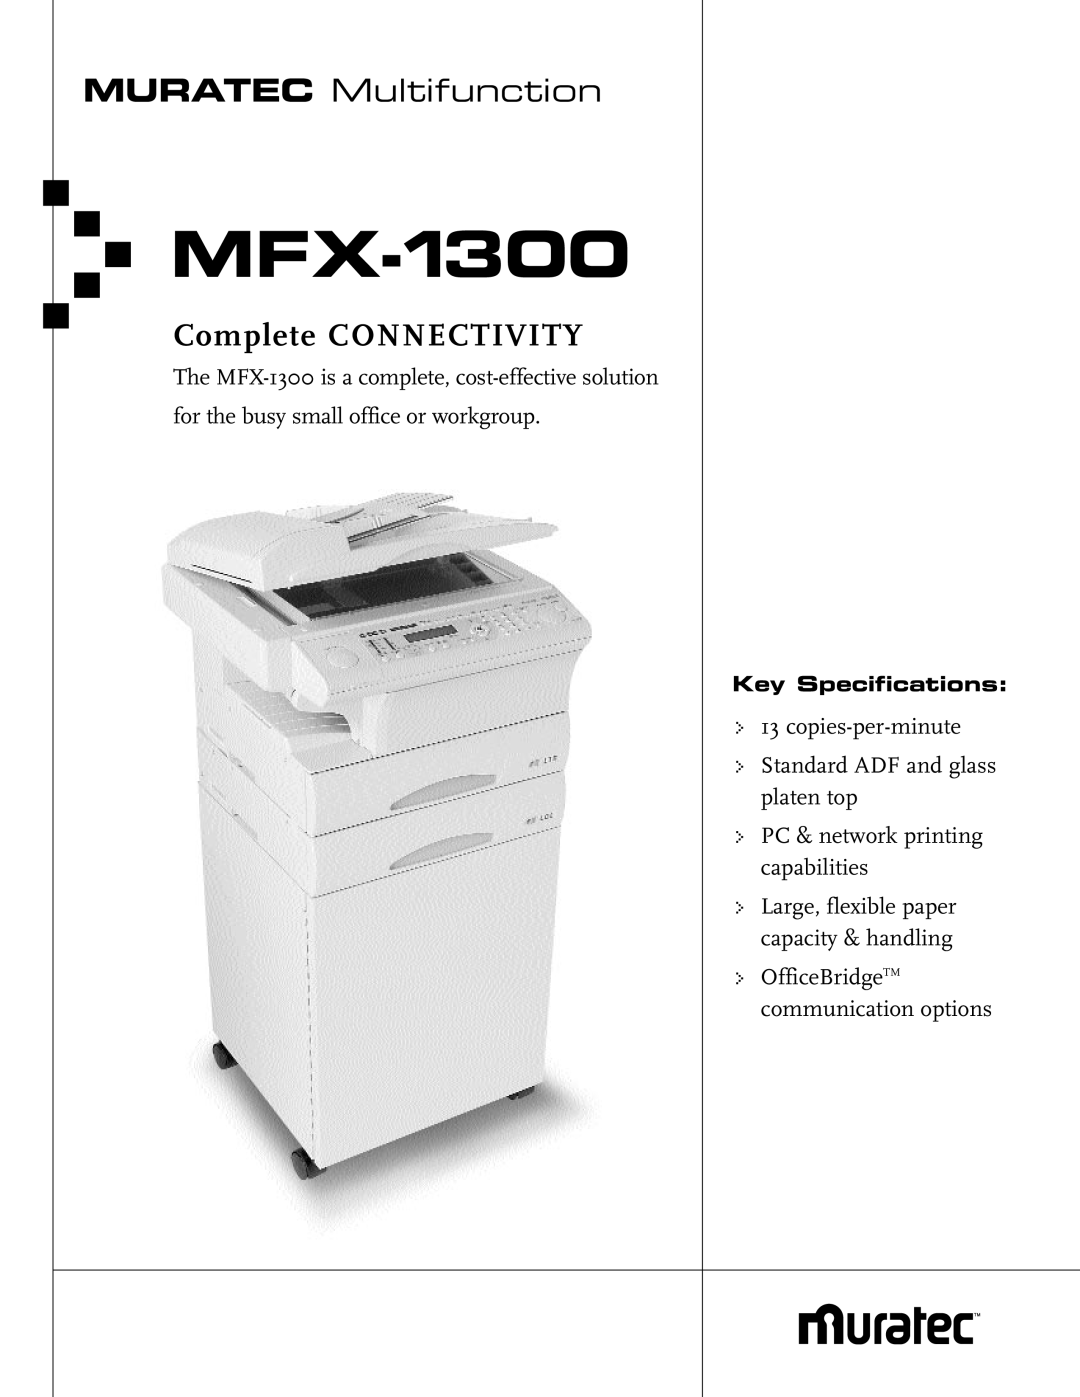 Muratec MFX-1300 specifications MURATEC Multifunction, MFXComplete CONNECTIVITY-1300, PC & network printing capabilities 